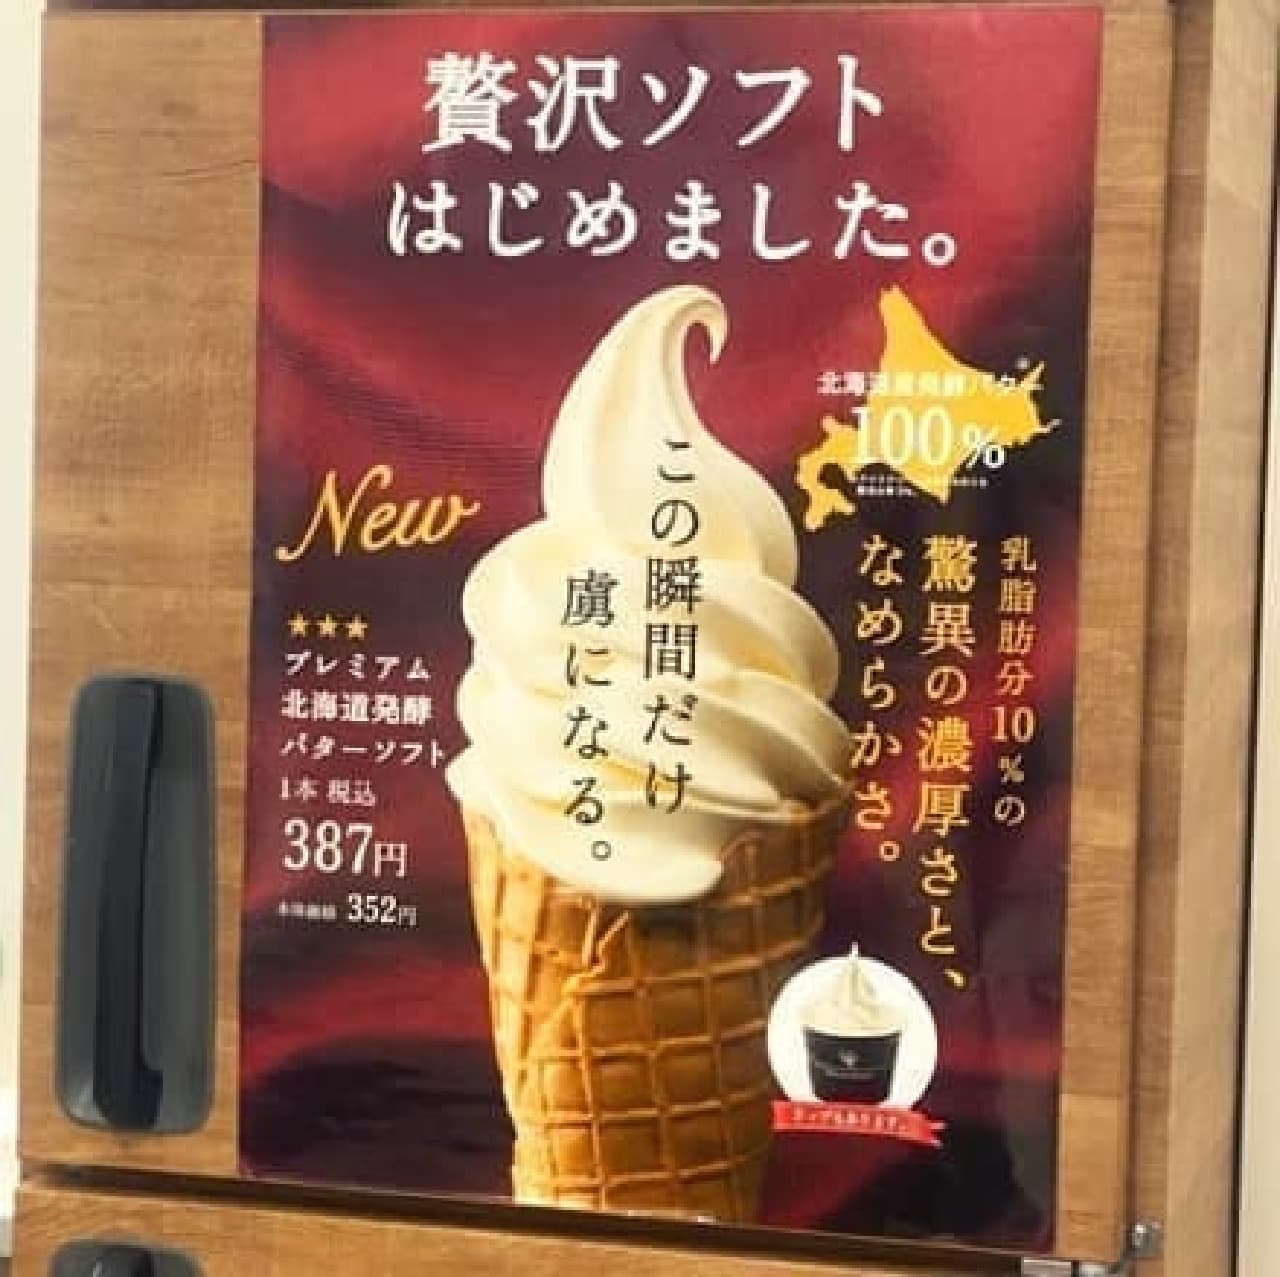 "Premium Hokkaido Fermented Butter Soft" from Chateraise Ario Kasai